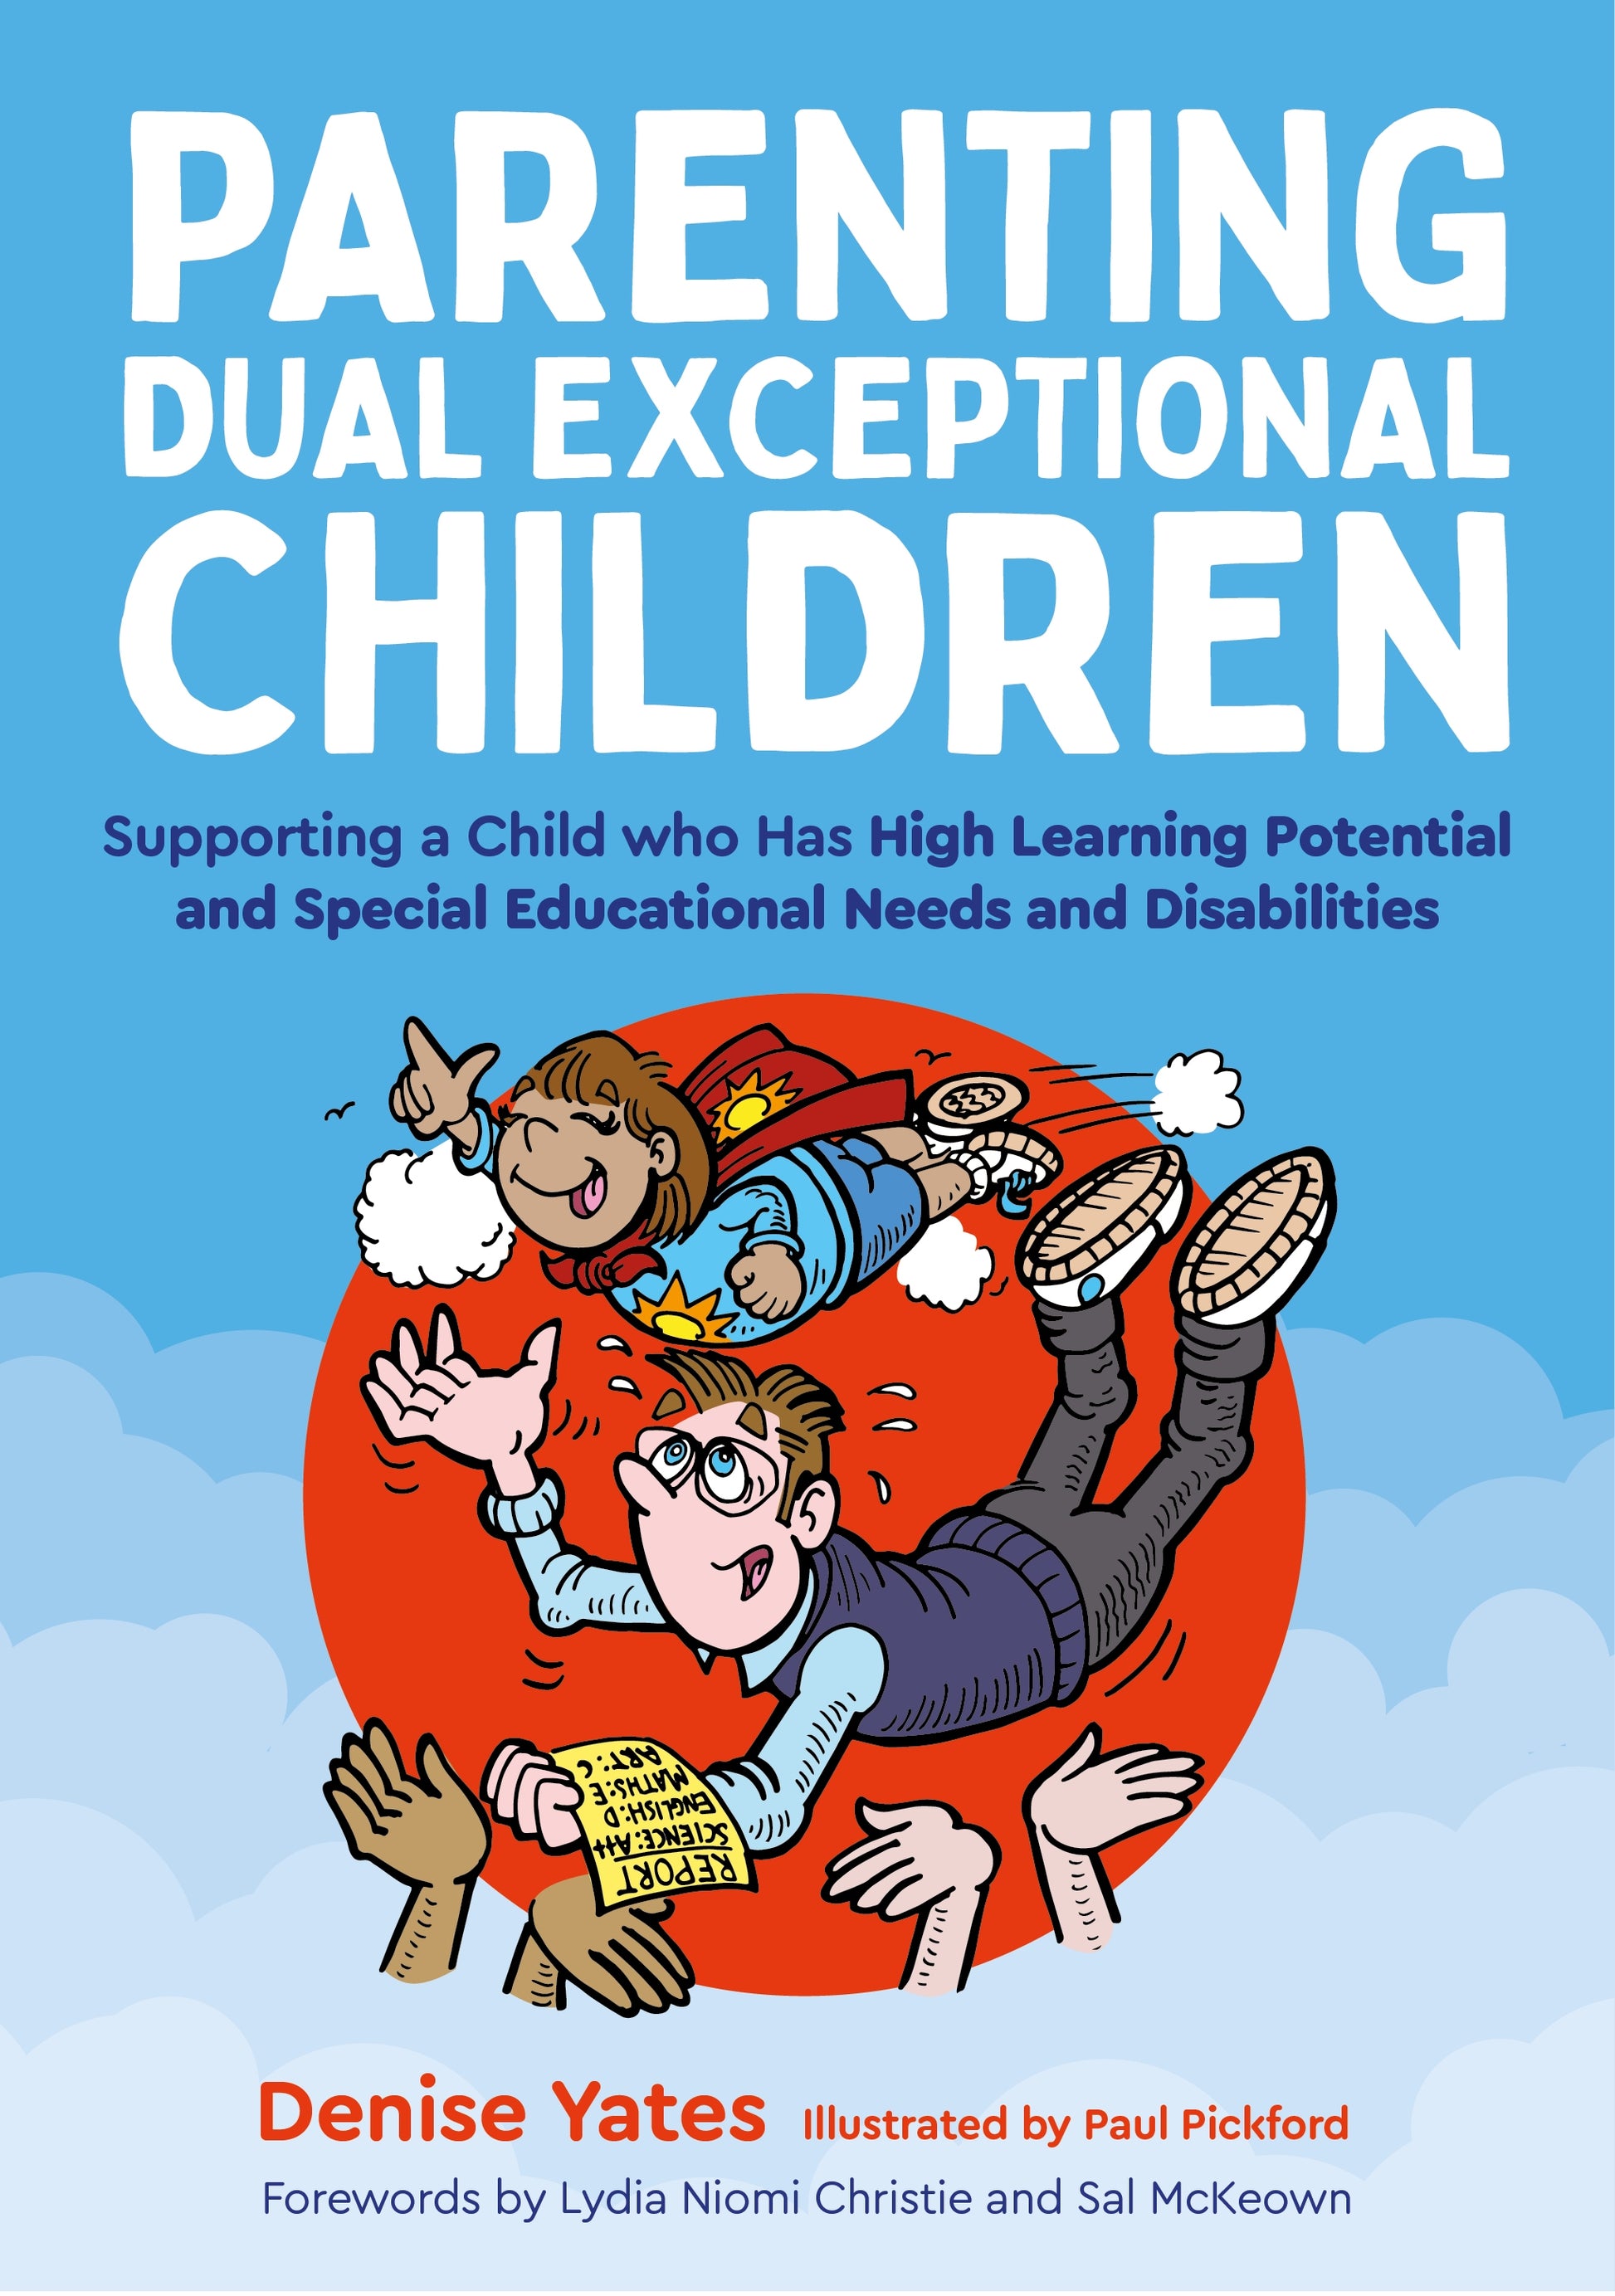 Parenting Dual Exceptional Children by Denise Yates, Paul Pickford, Lydia Niomi Christie, Sal McKeown